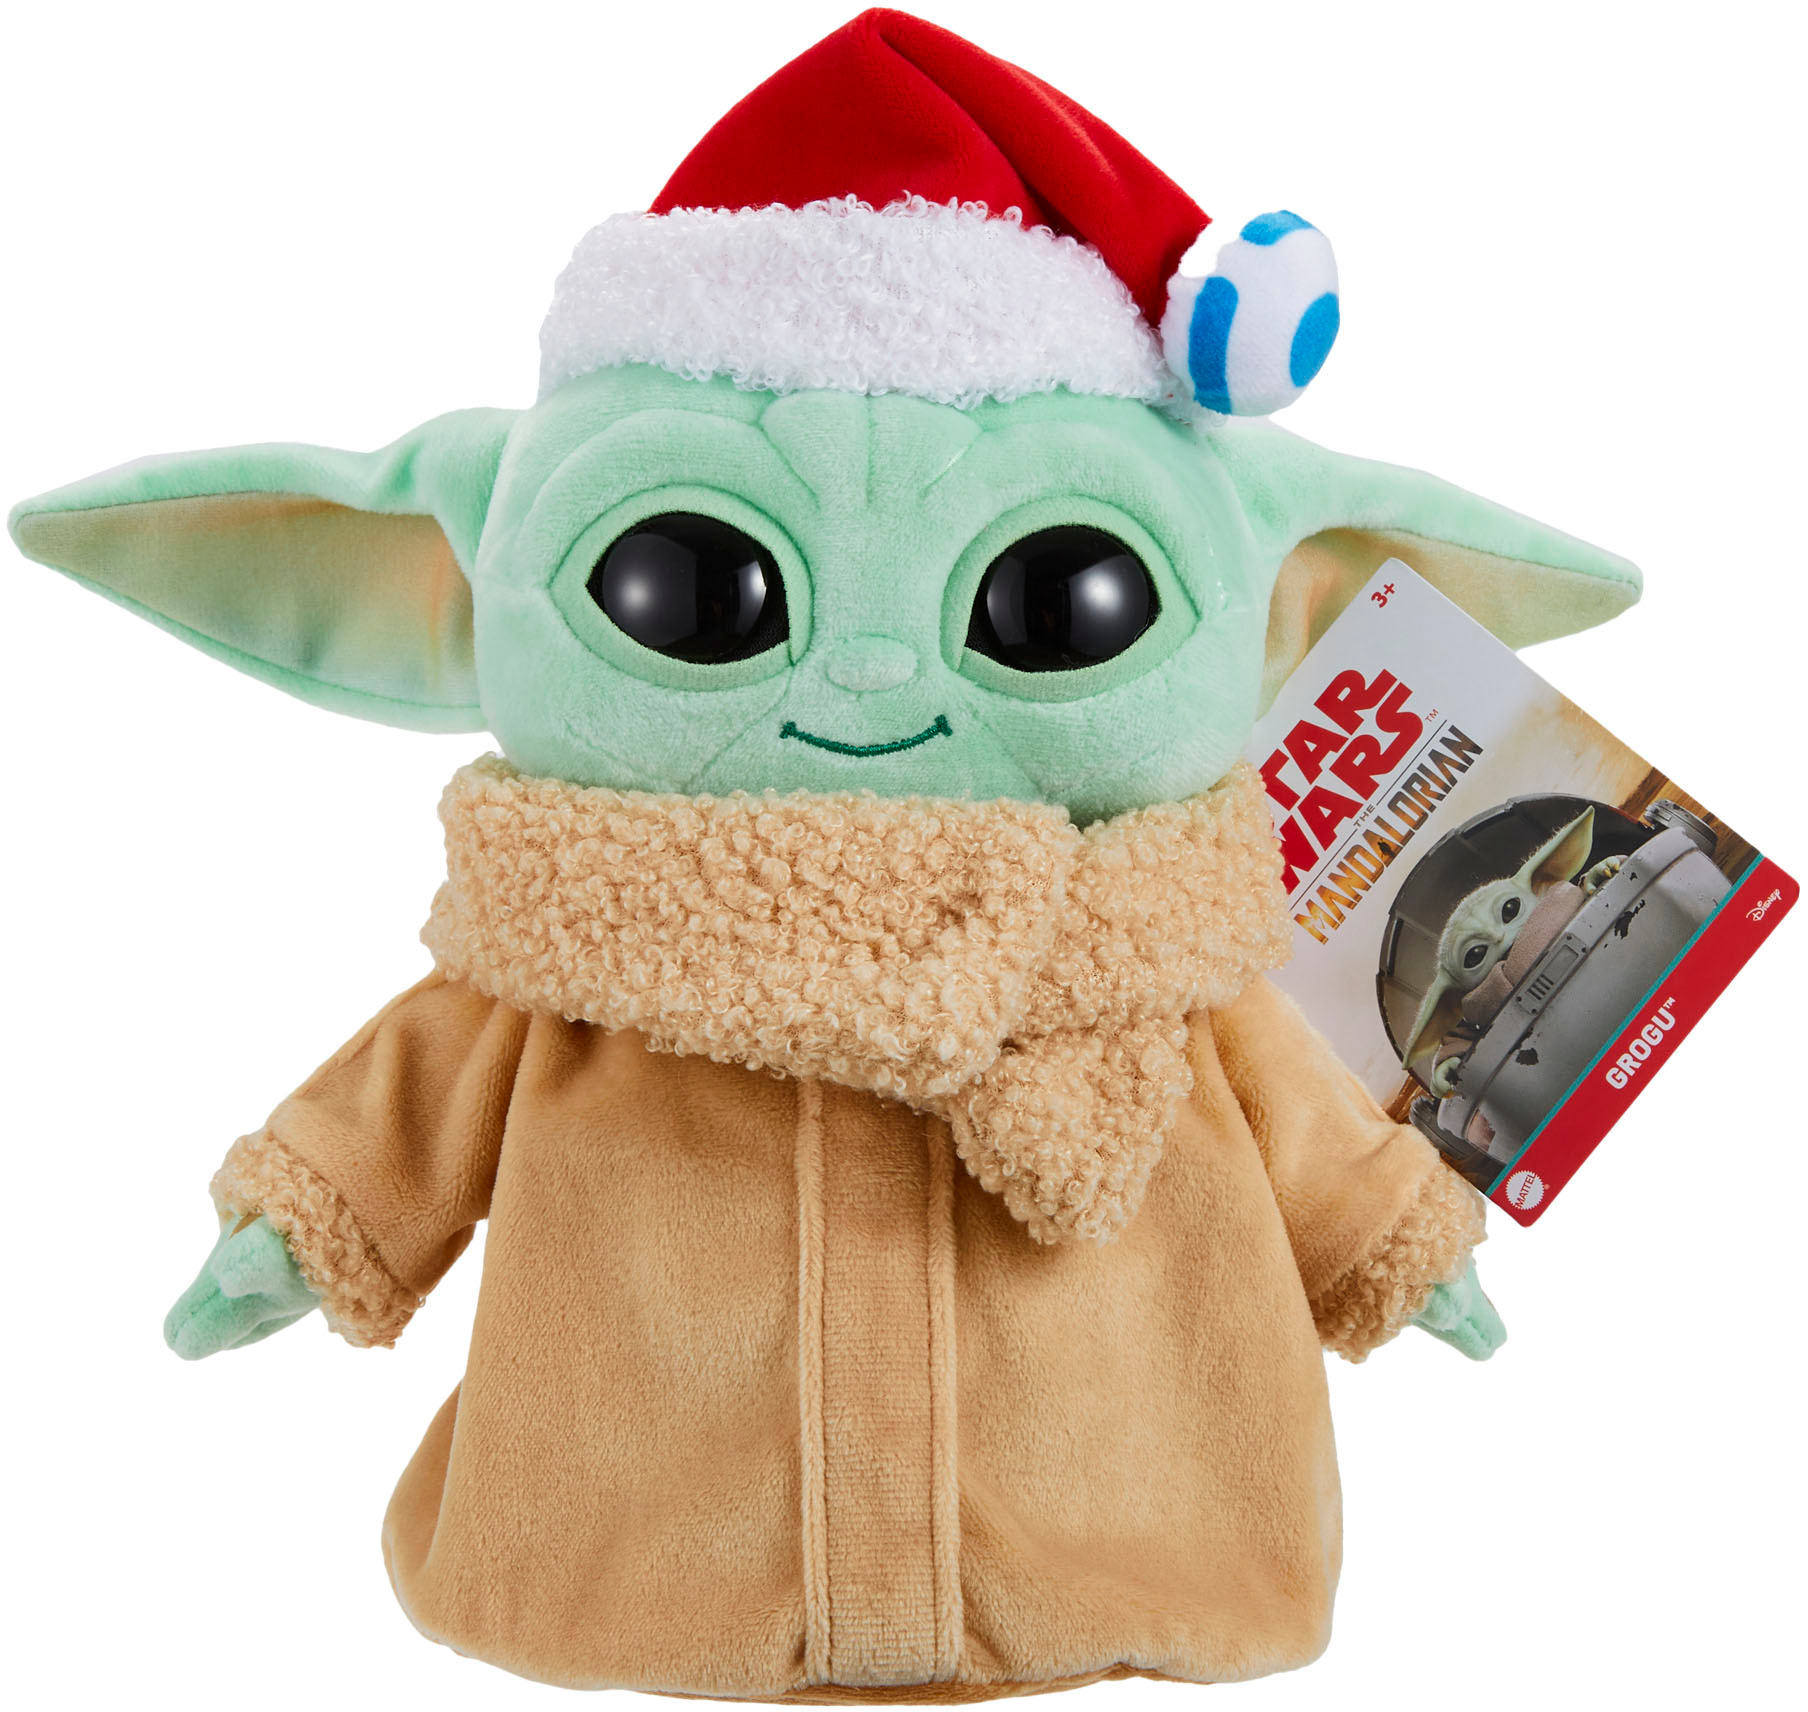 MATTEL Disney Star Wars Baby Yoda the child Mandalorian 11 inch Tall Plush